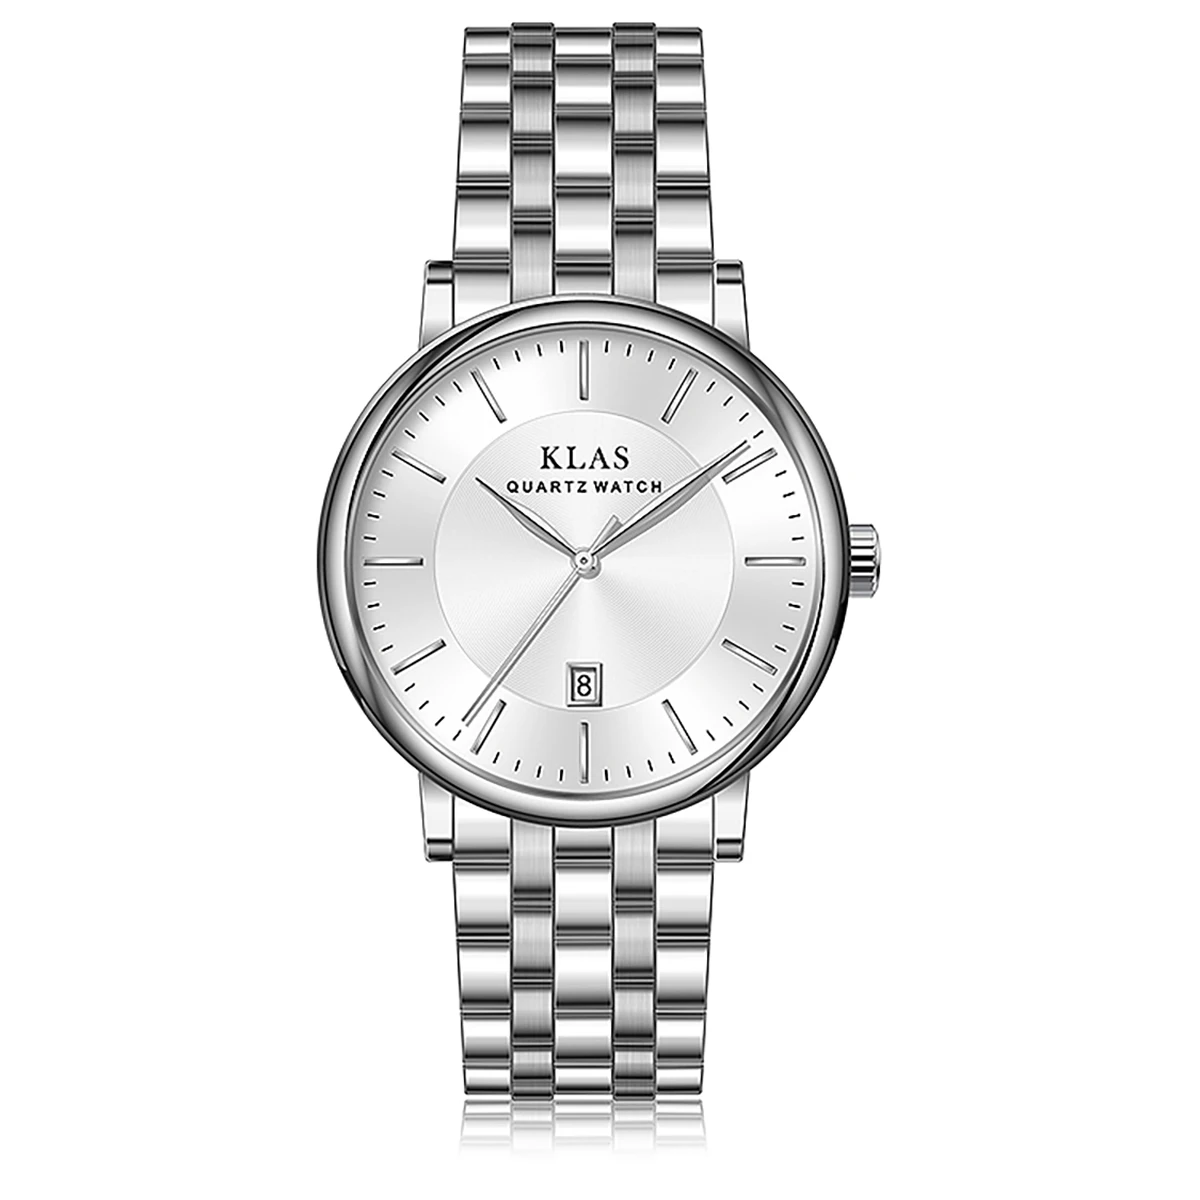 Luxury Watch brand men's watch waterproof business watch stainless steel automatic silver KLAS brand